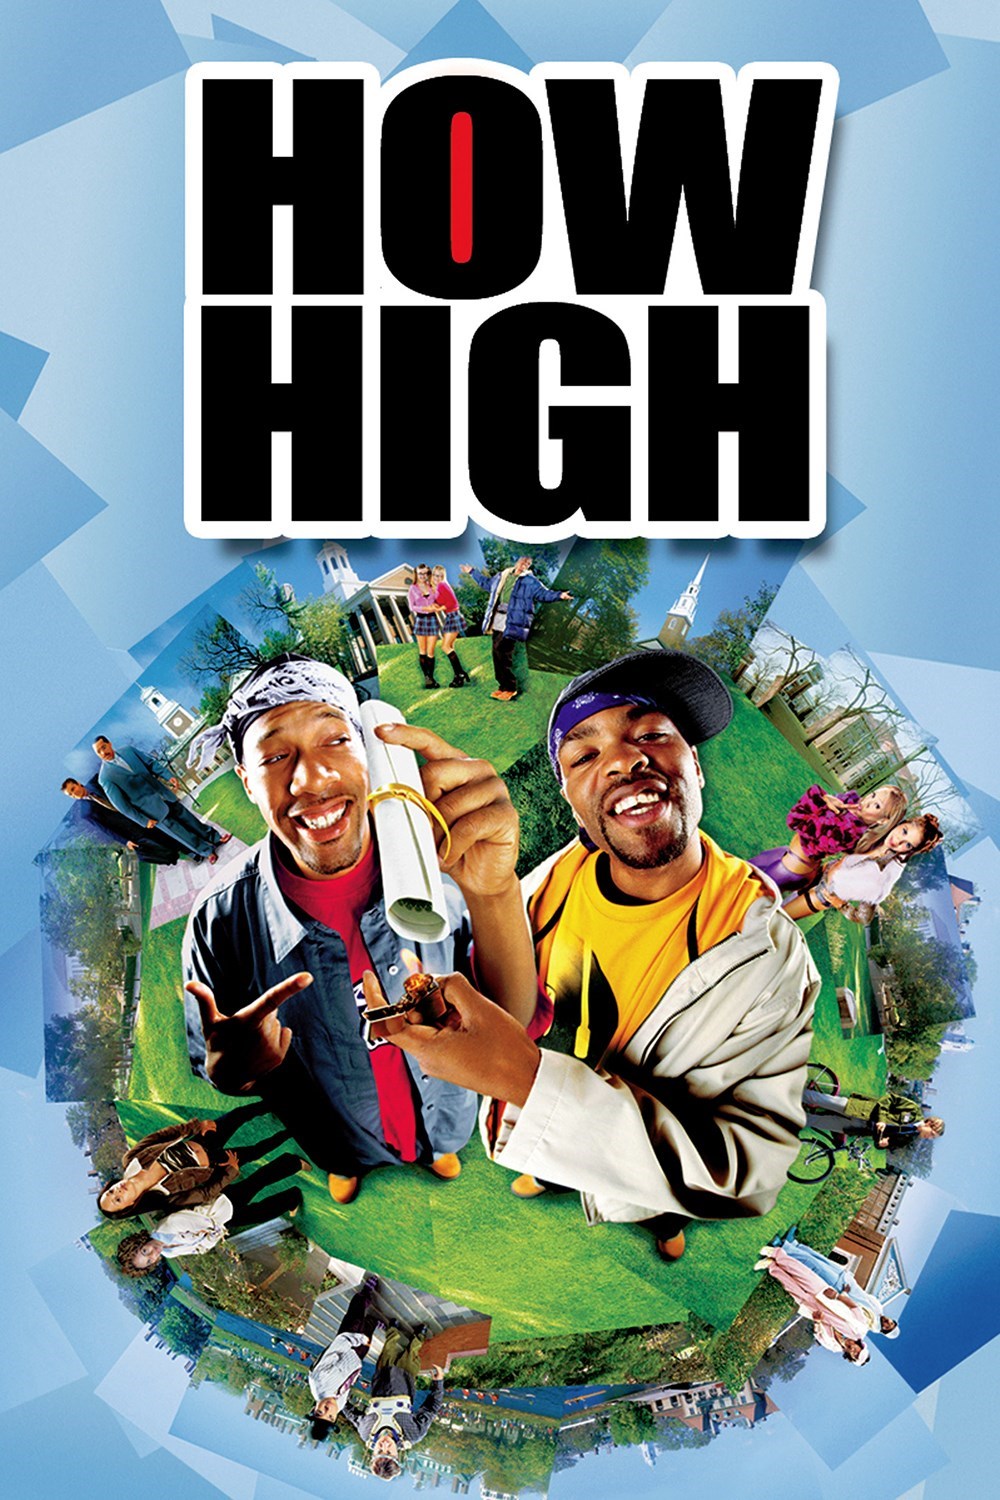 High & Low The Movie (2016) Method Man